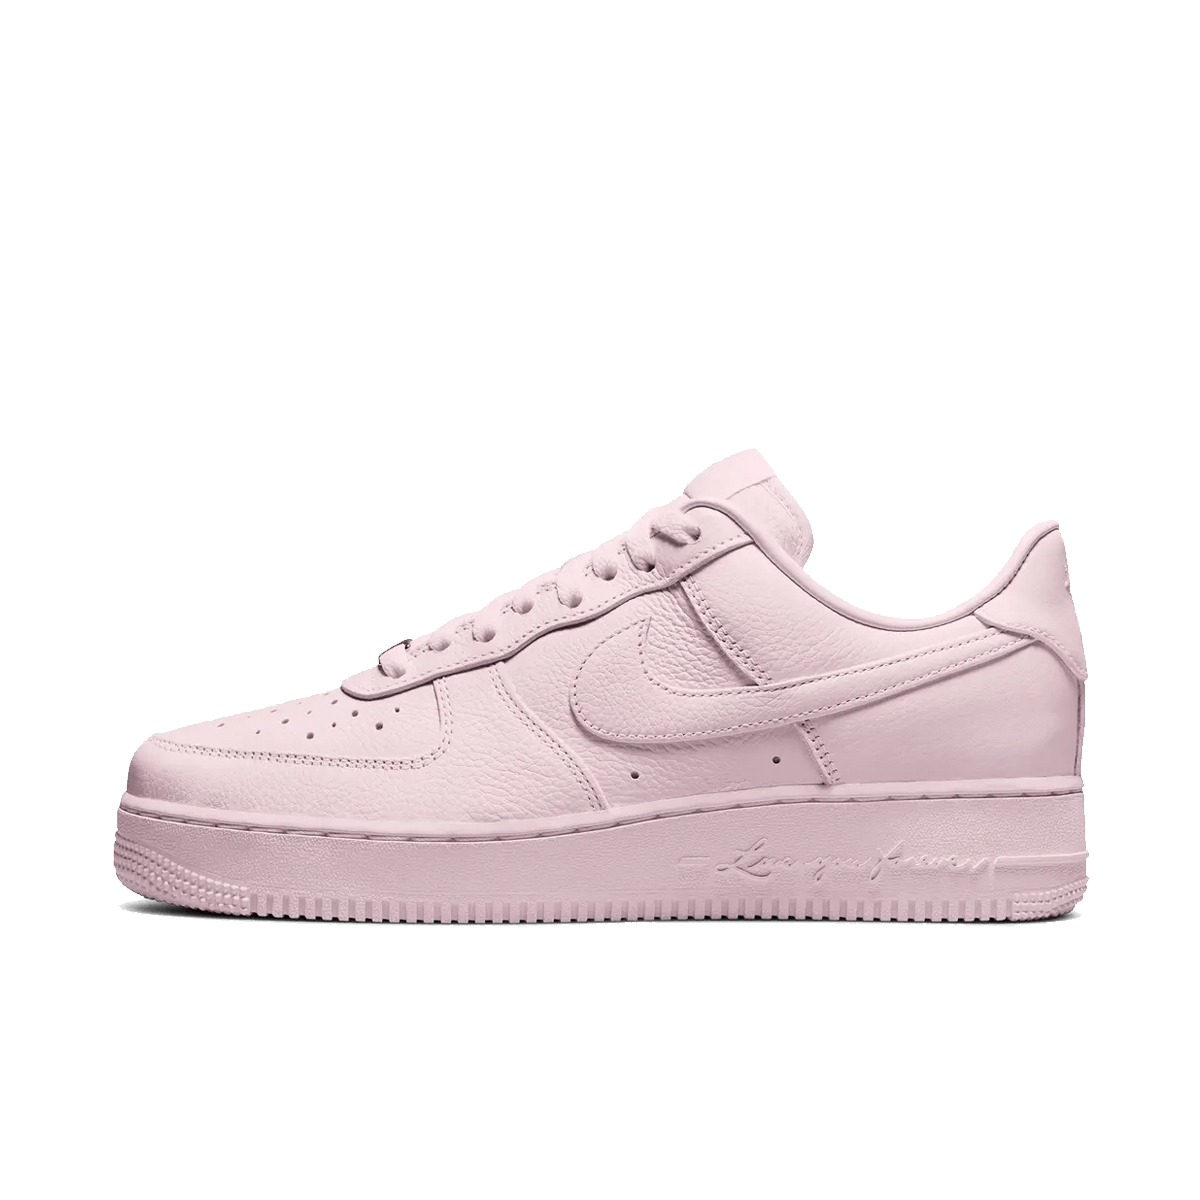 NOCTA x Nike Air Force 1 'Pink Foam' - Certified Lover Boy Pack